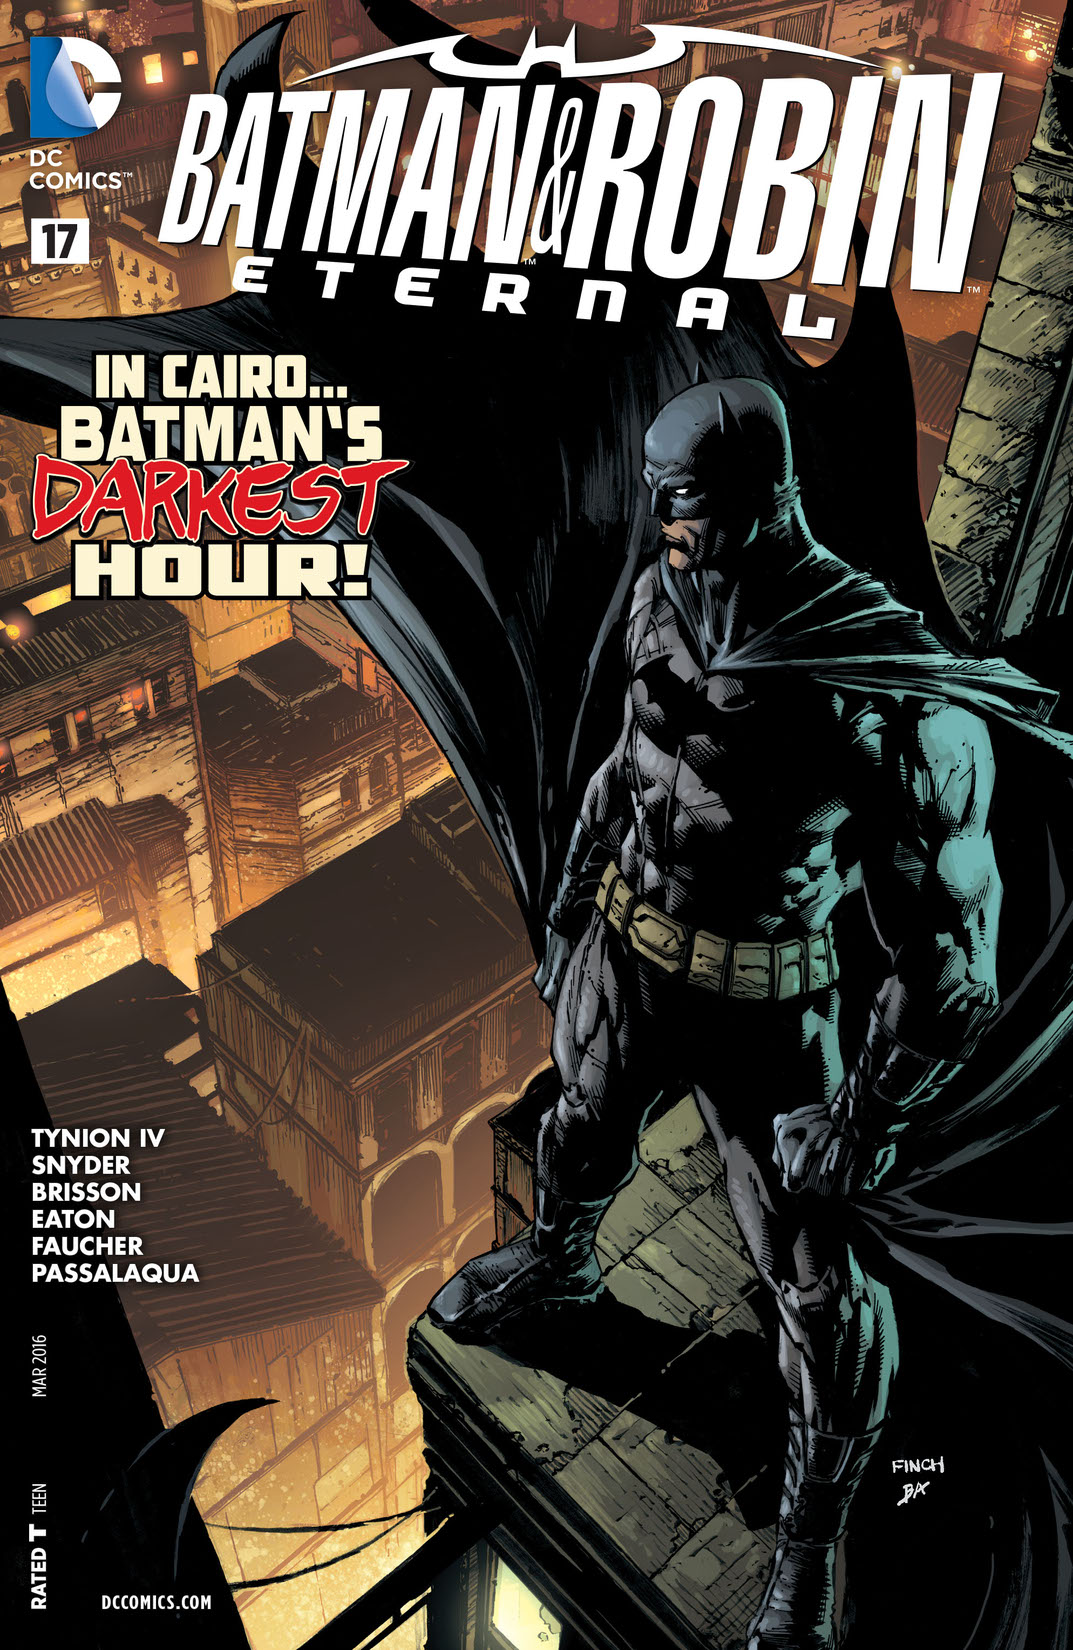 Batman & Robin Eternal #17 preview images